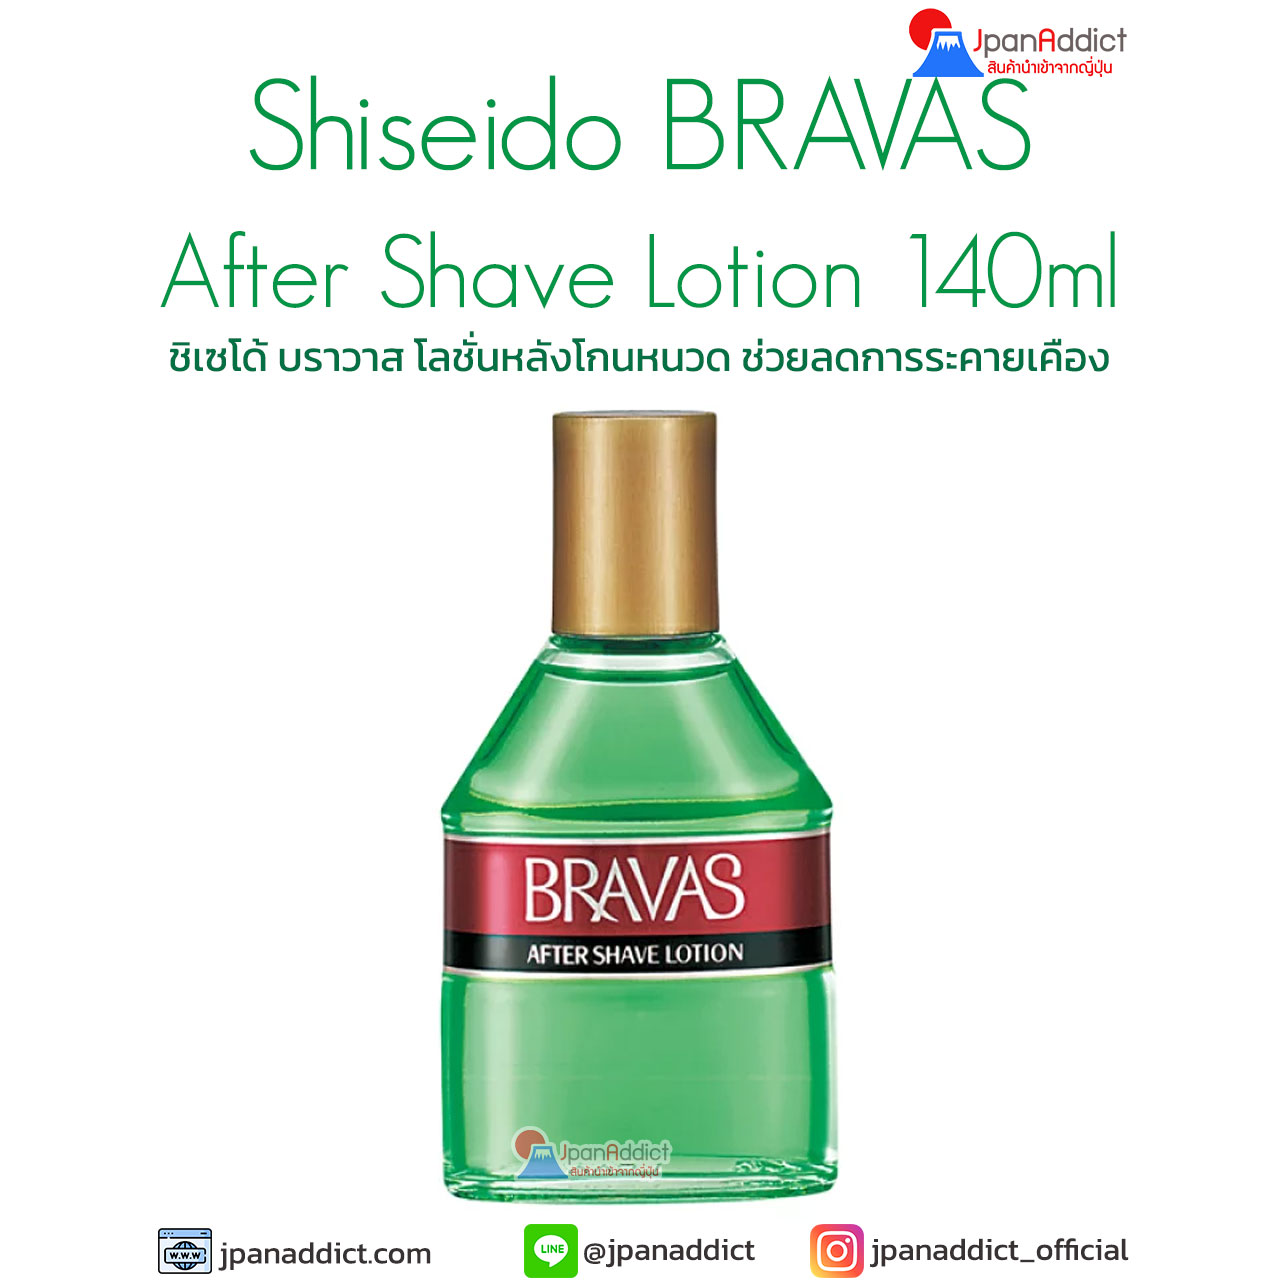 Shiseido Bravas After Shave Lotion 140ml